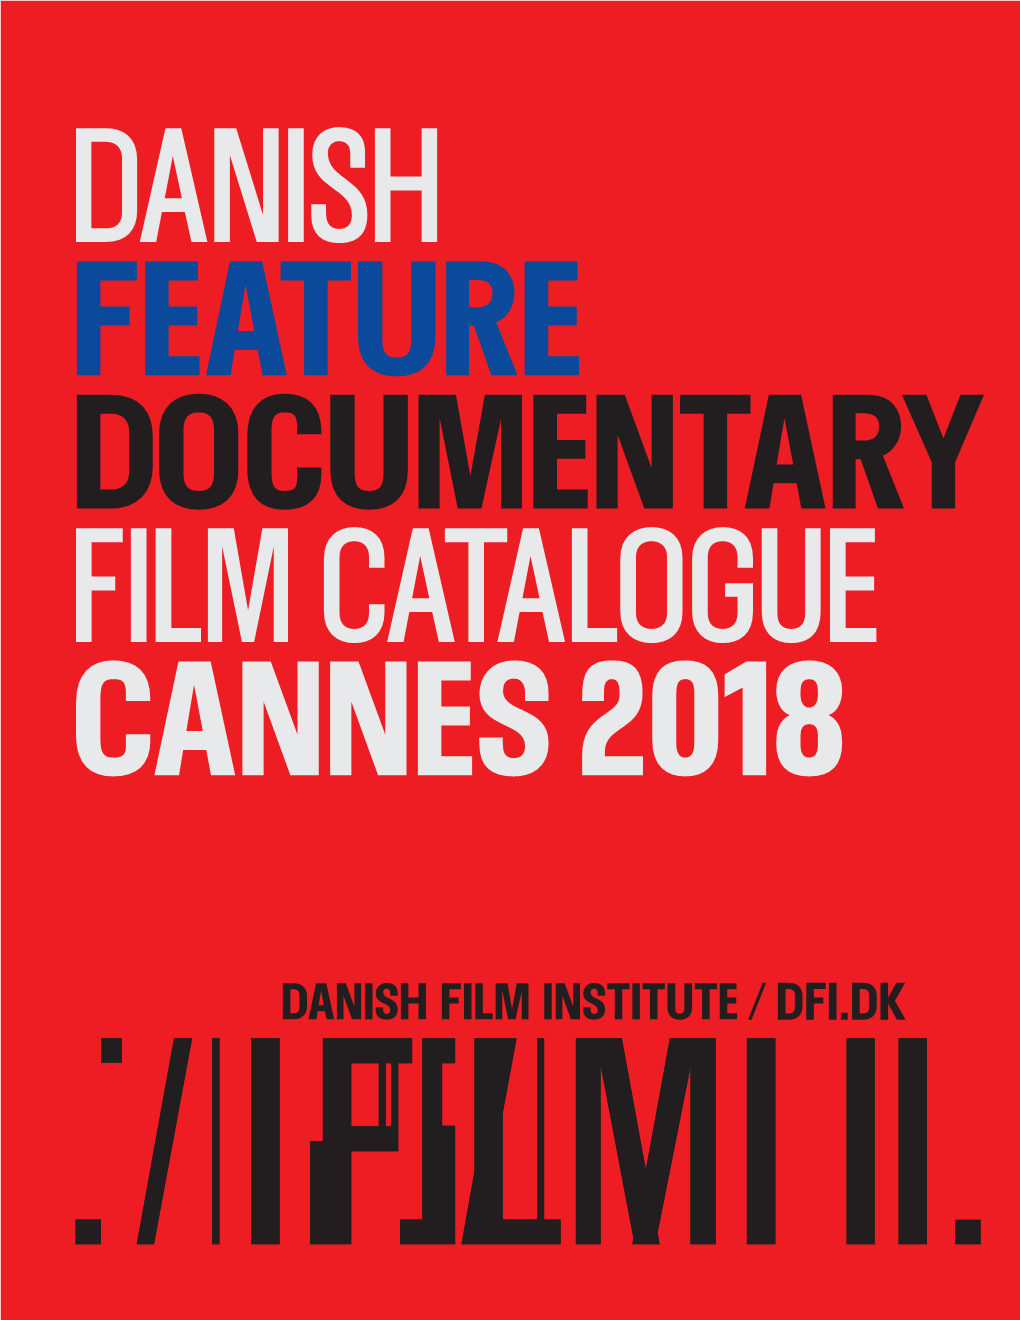 Danish Film Catalogue Cannes 2018.Pdf